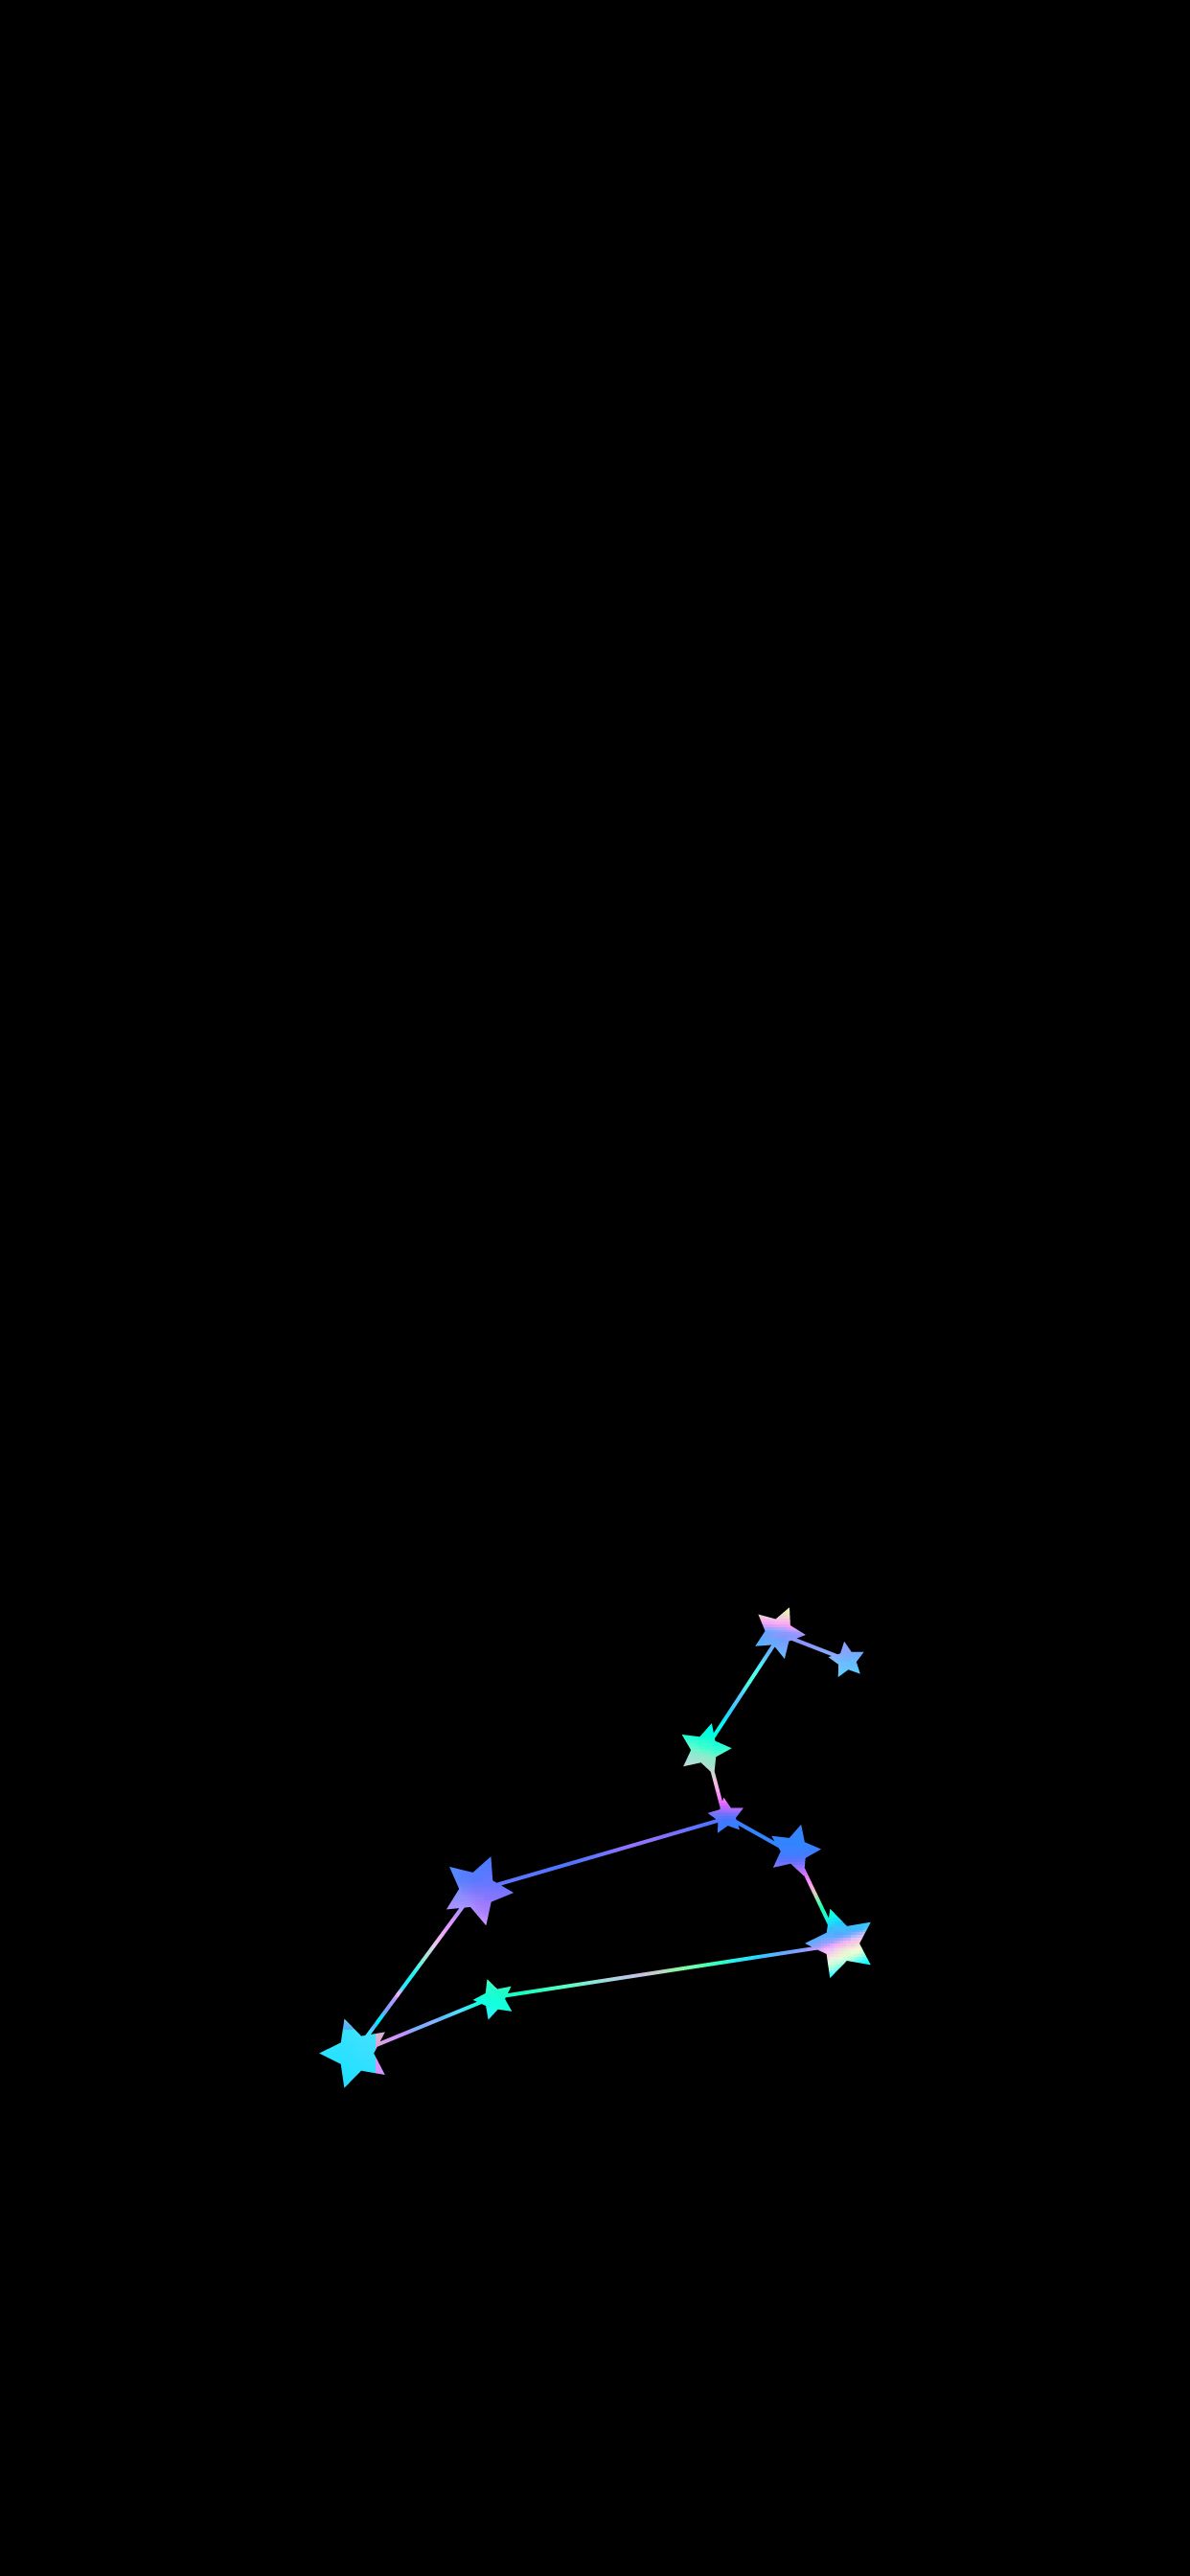 Black Leo Constellation iPhone Wallpaper